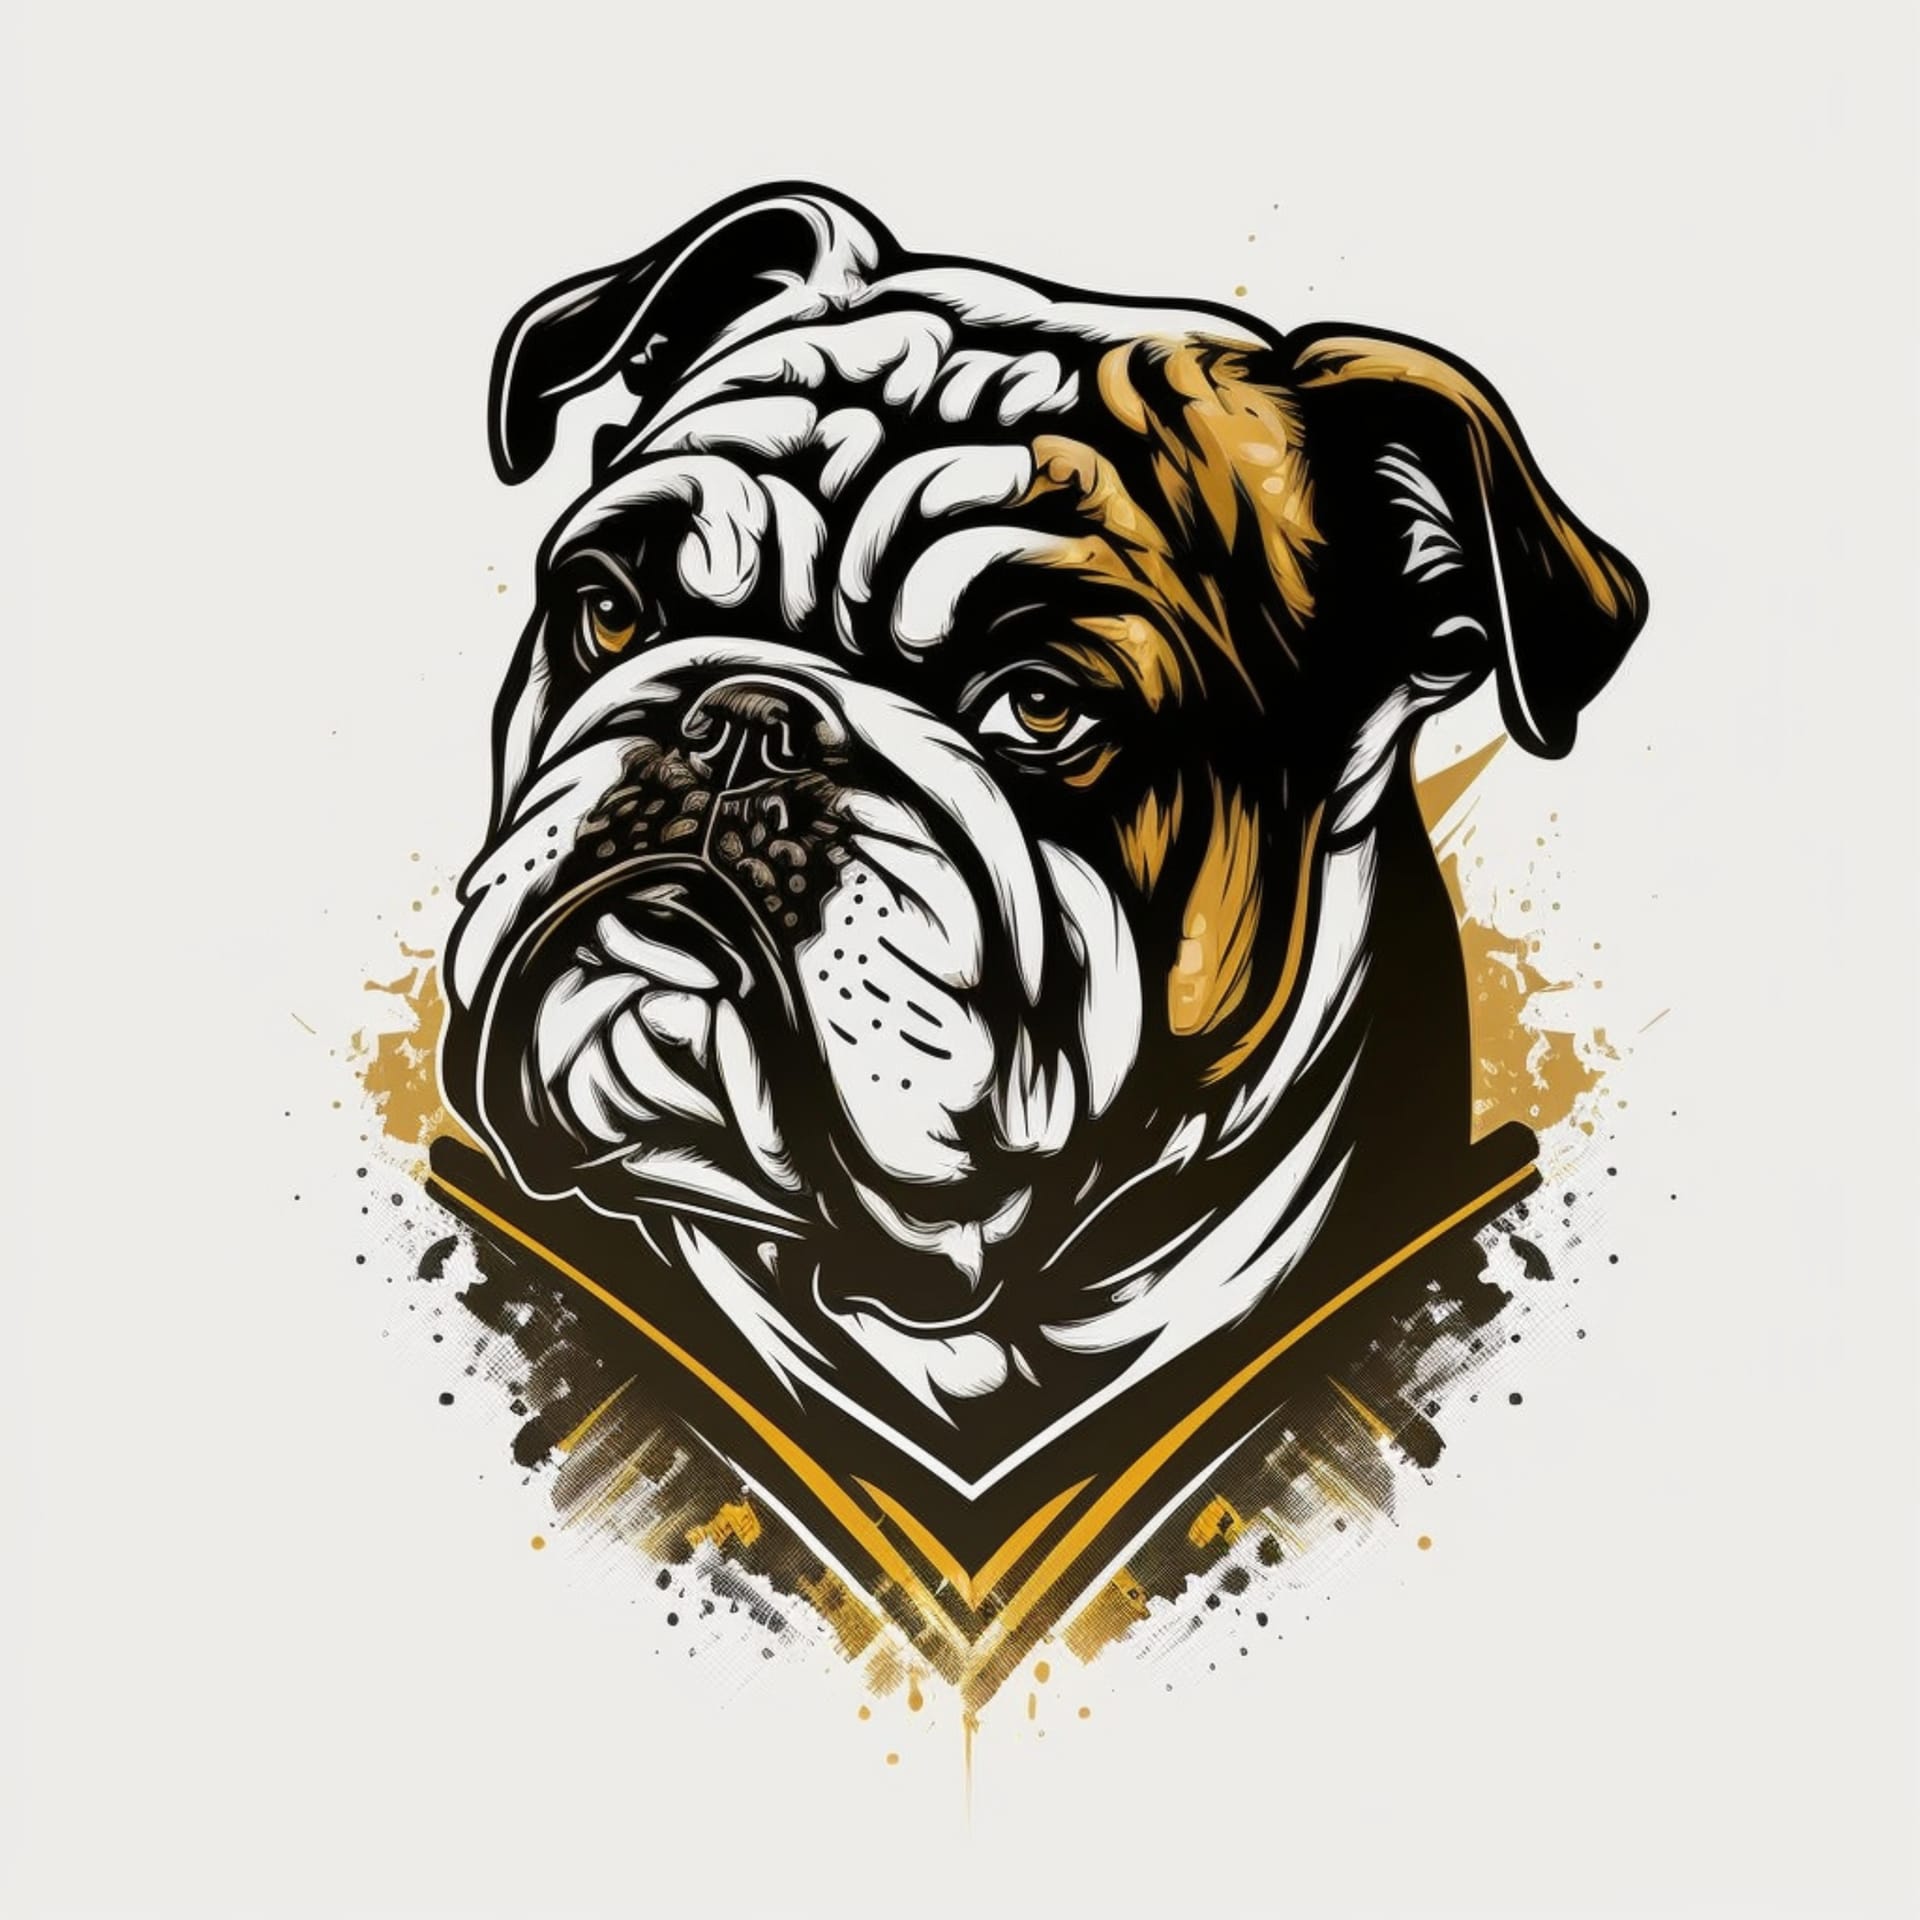 Bulldog logo illustration excellent picture